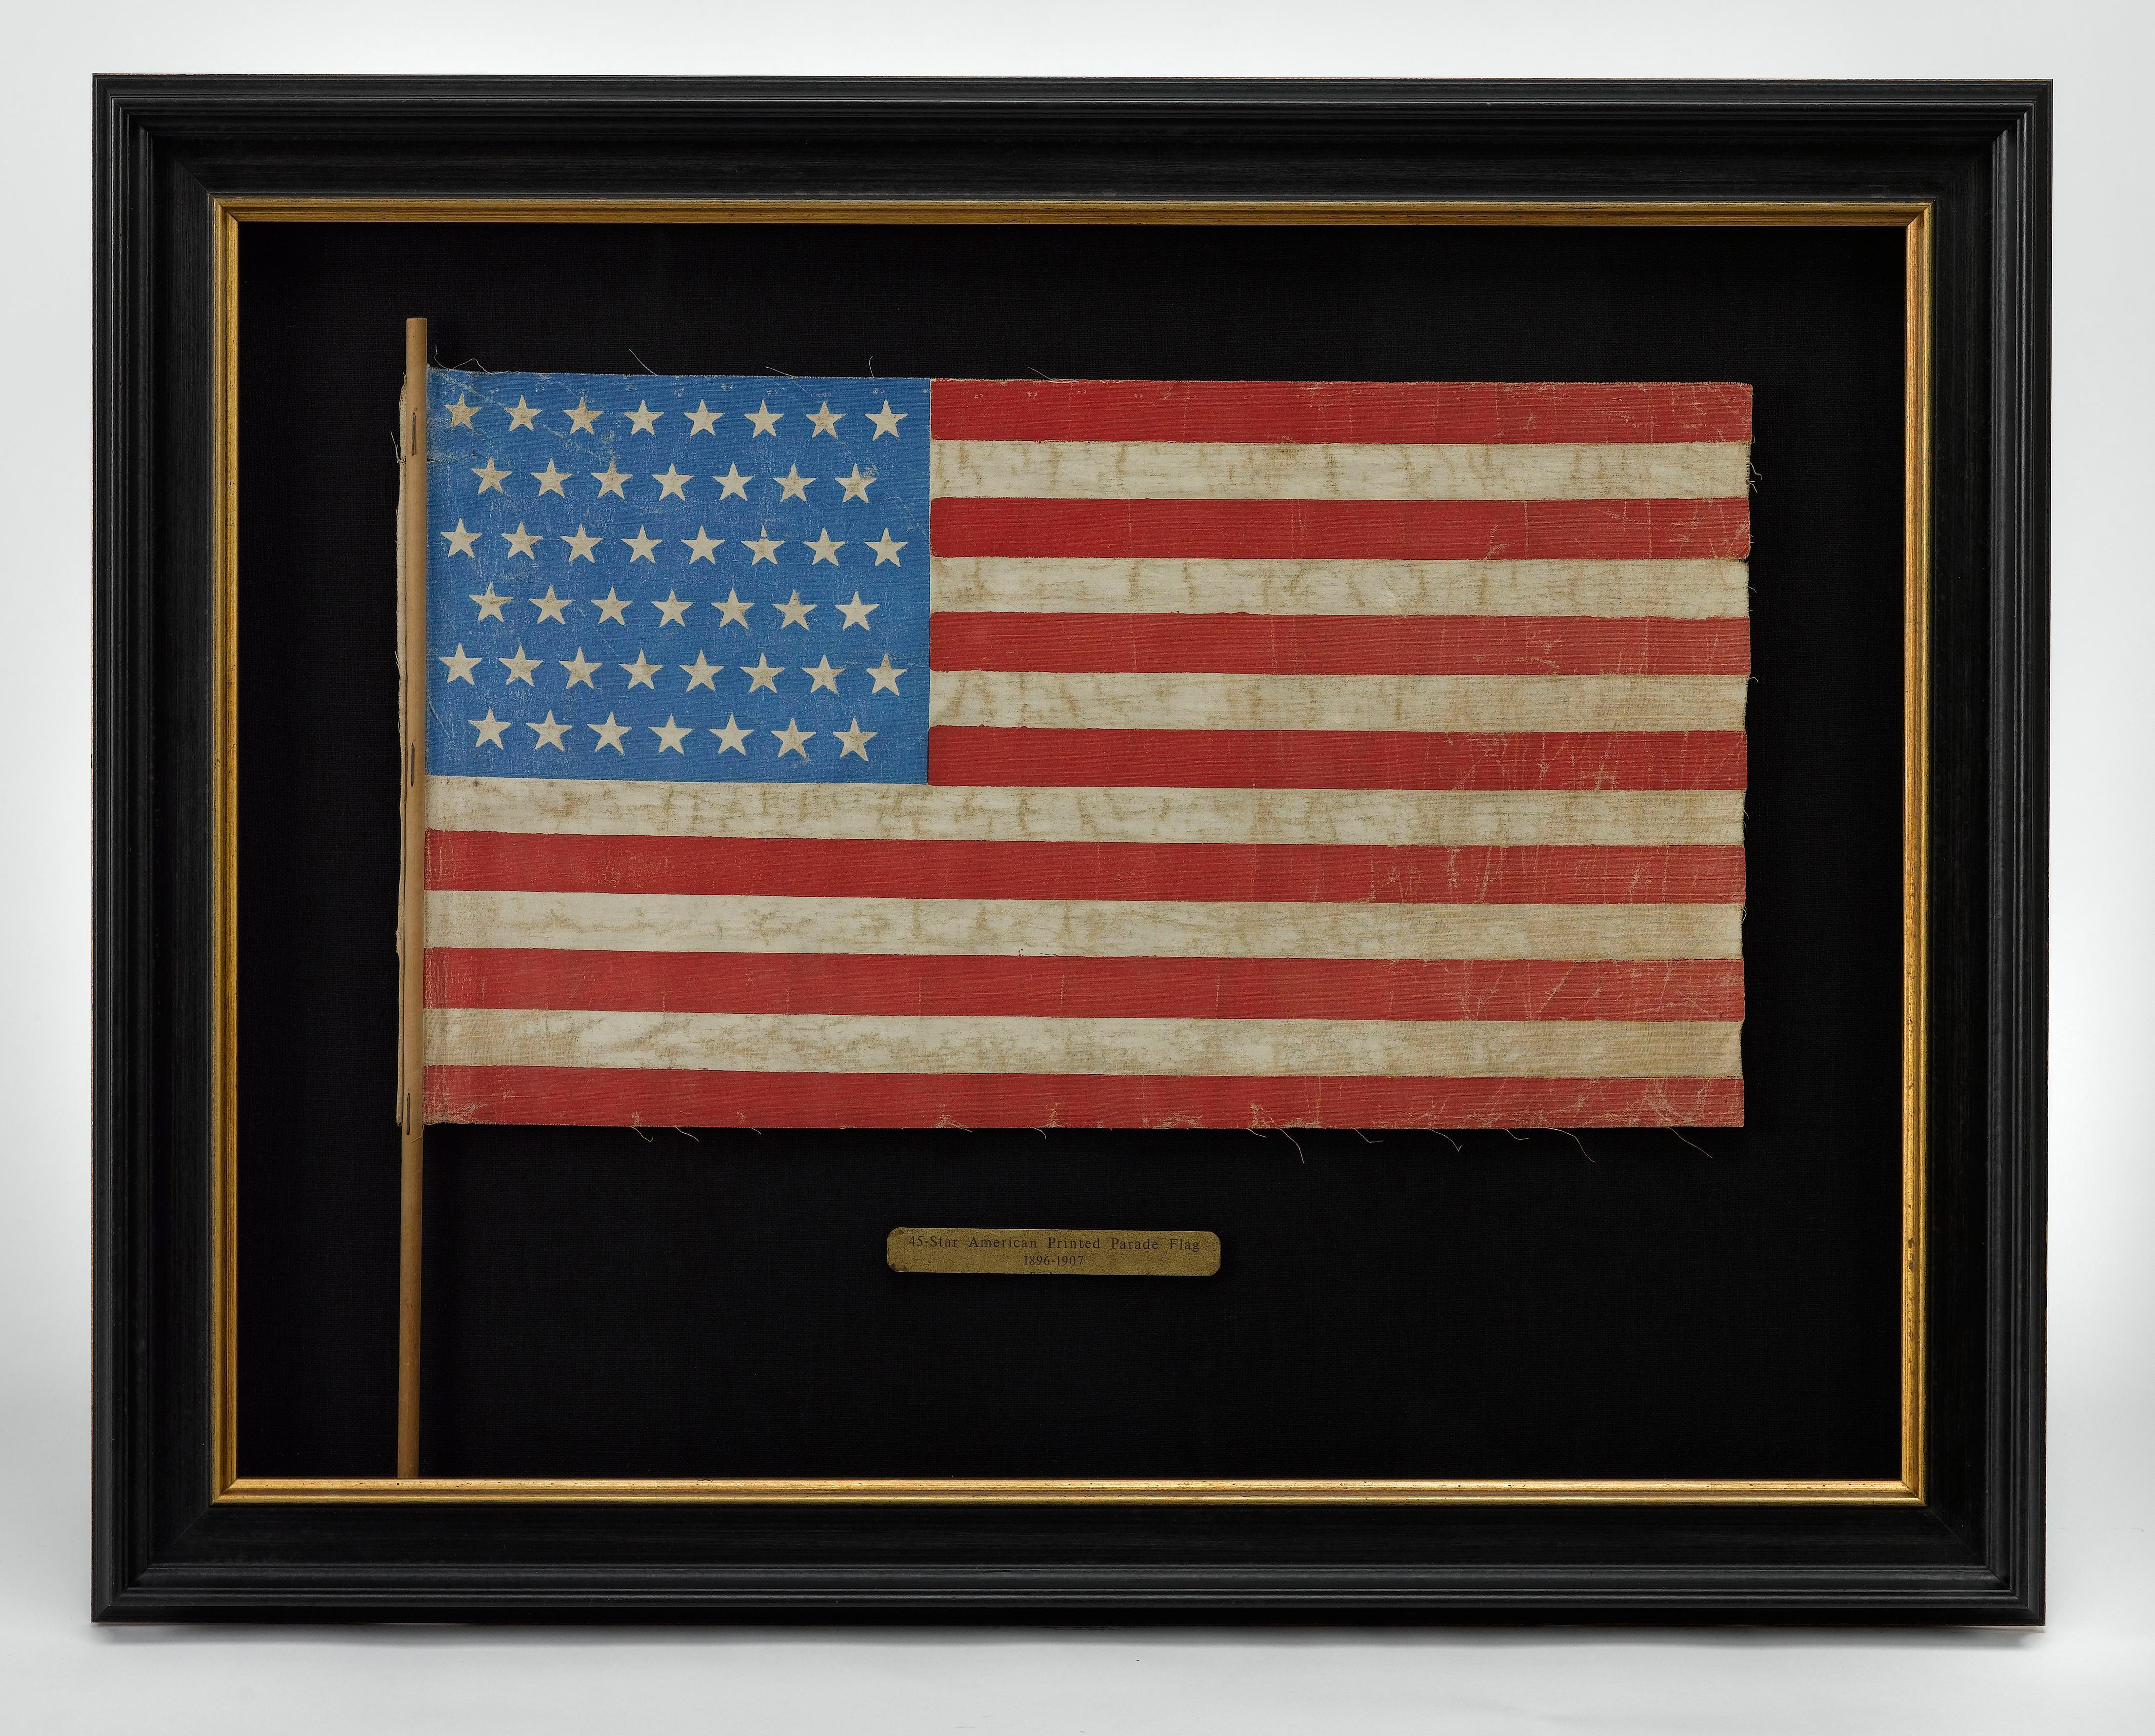 Fabric 45-Star American Printed Parade Flag, 1896-1907